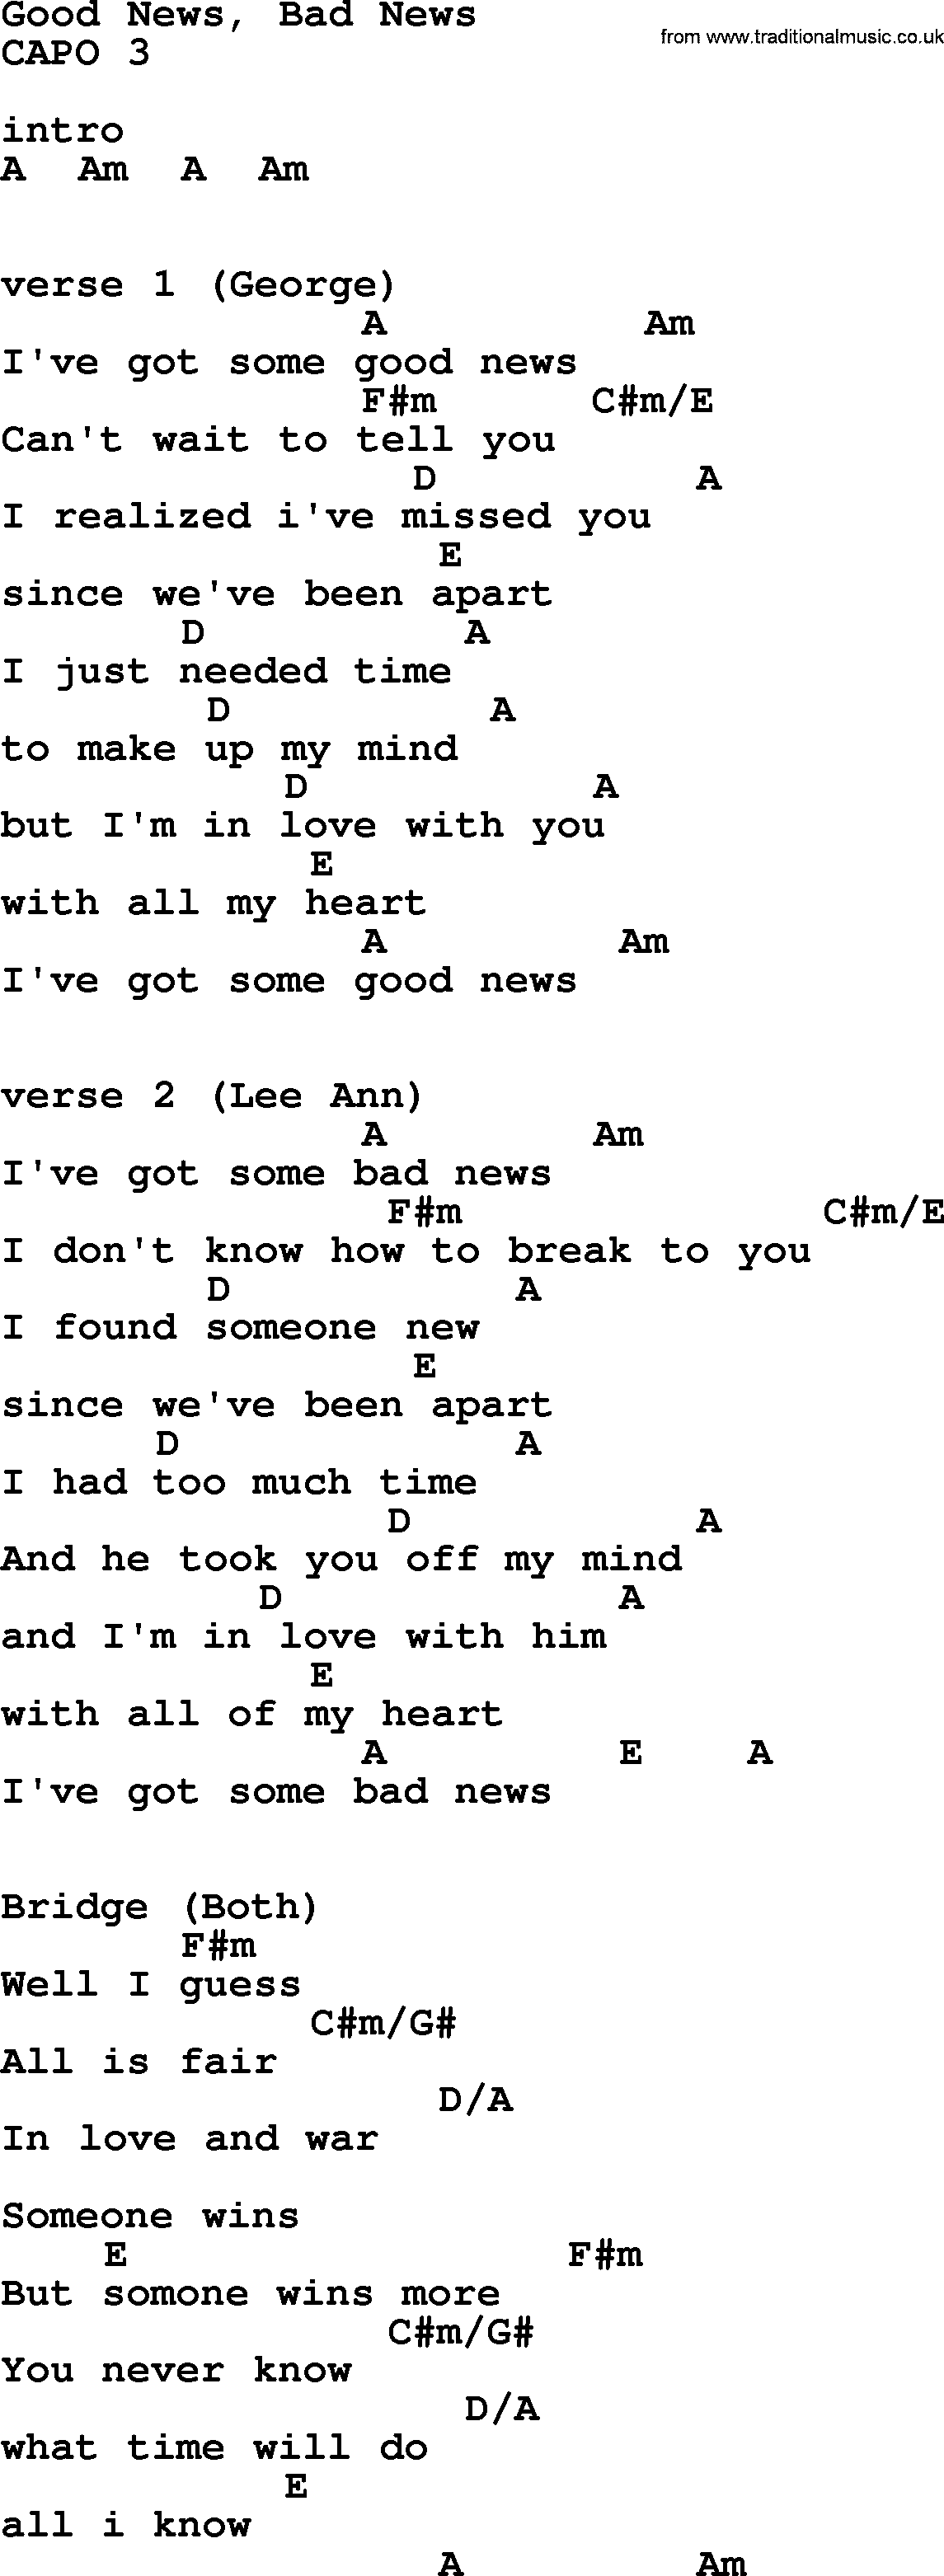 George Strait song: Good News, Bad News, lyrics and chords